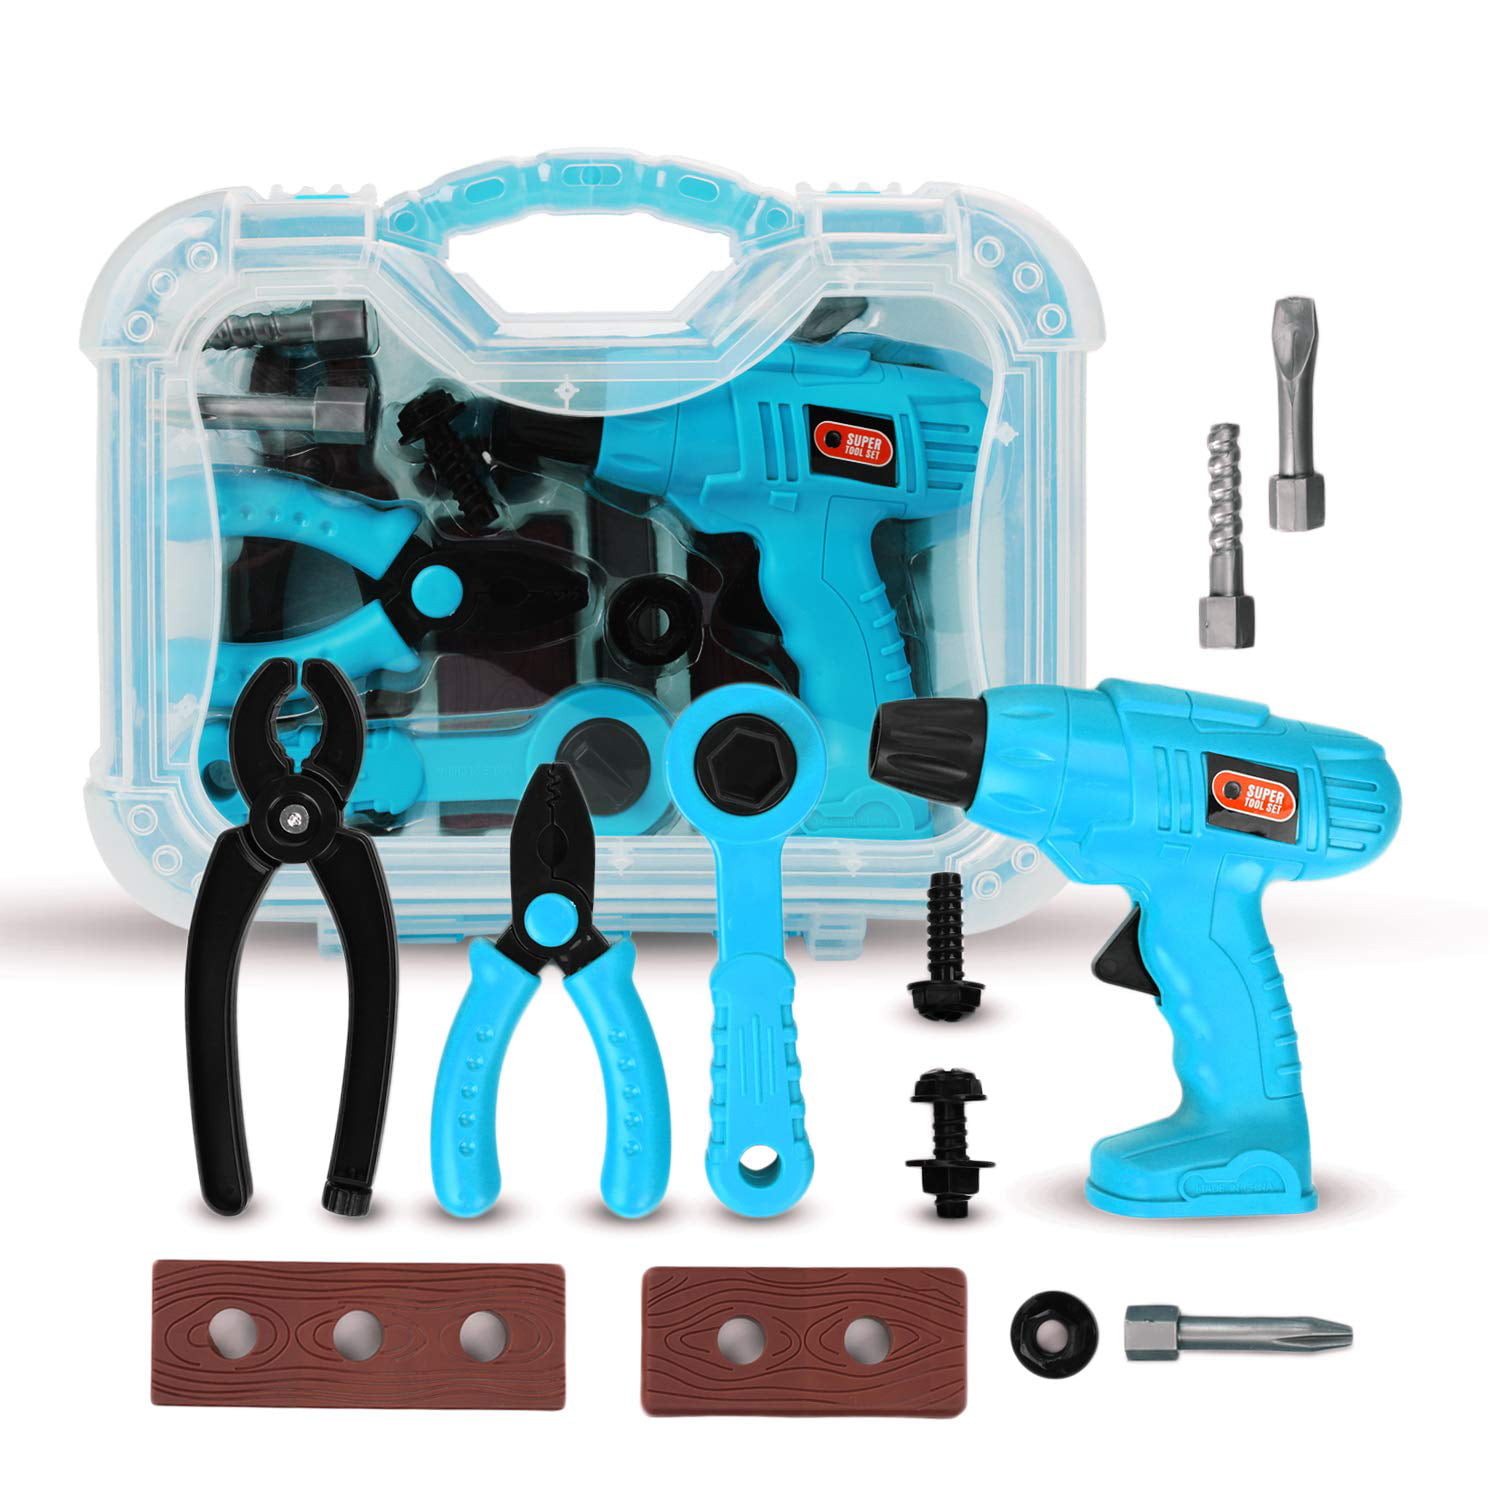 Repair Toy Tools Set For Kids Children Gift Preschool Pretend Play 14pcs Hammer 